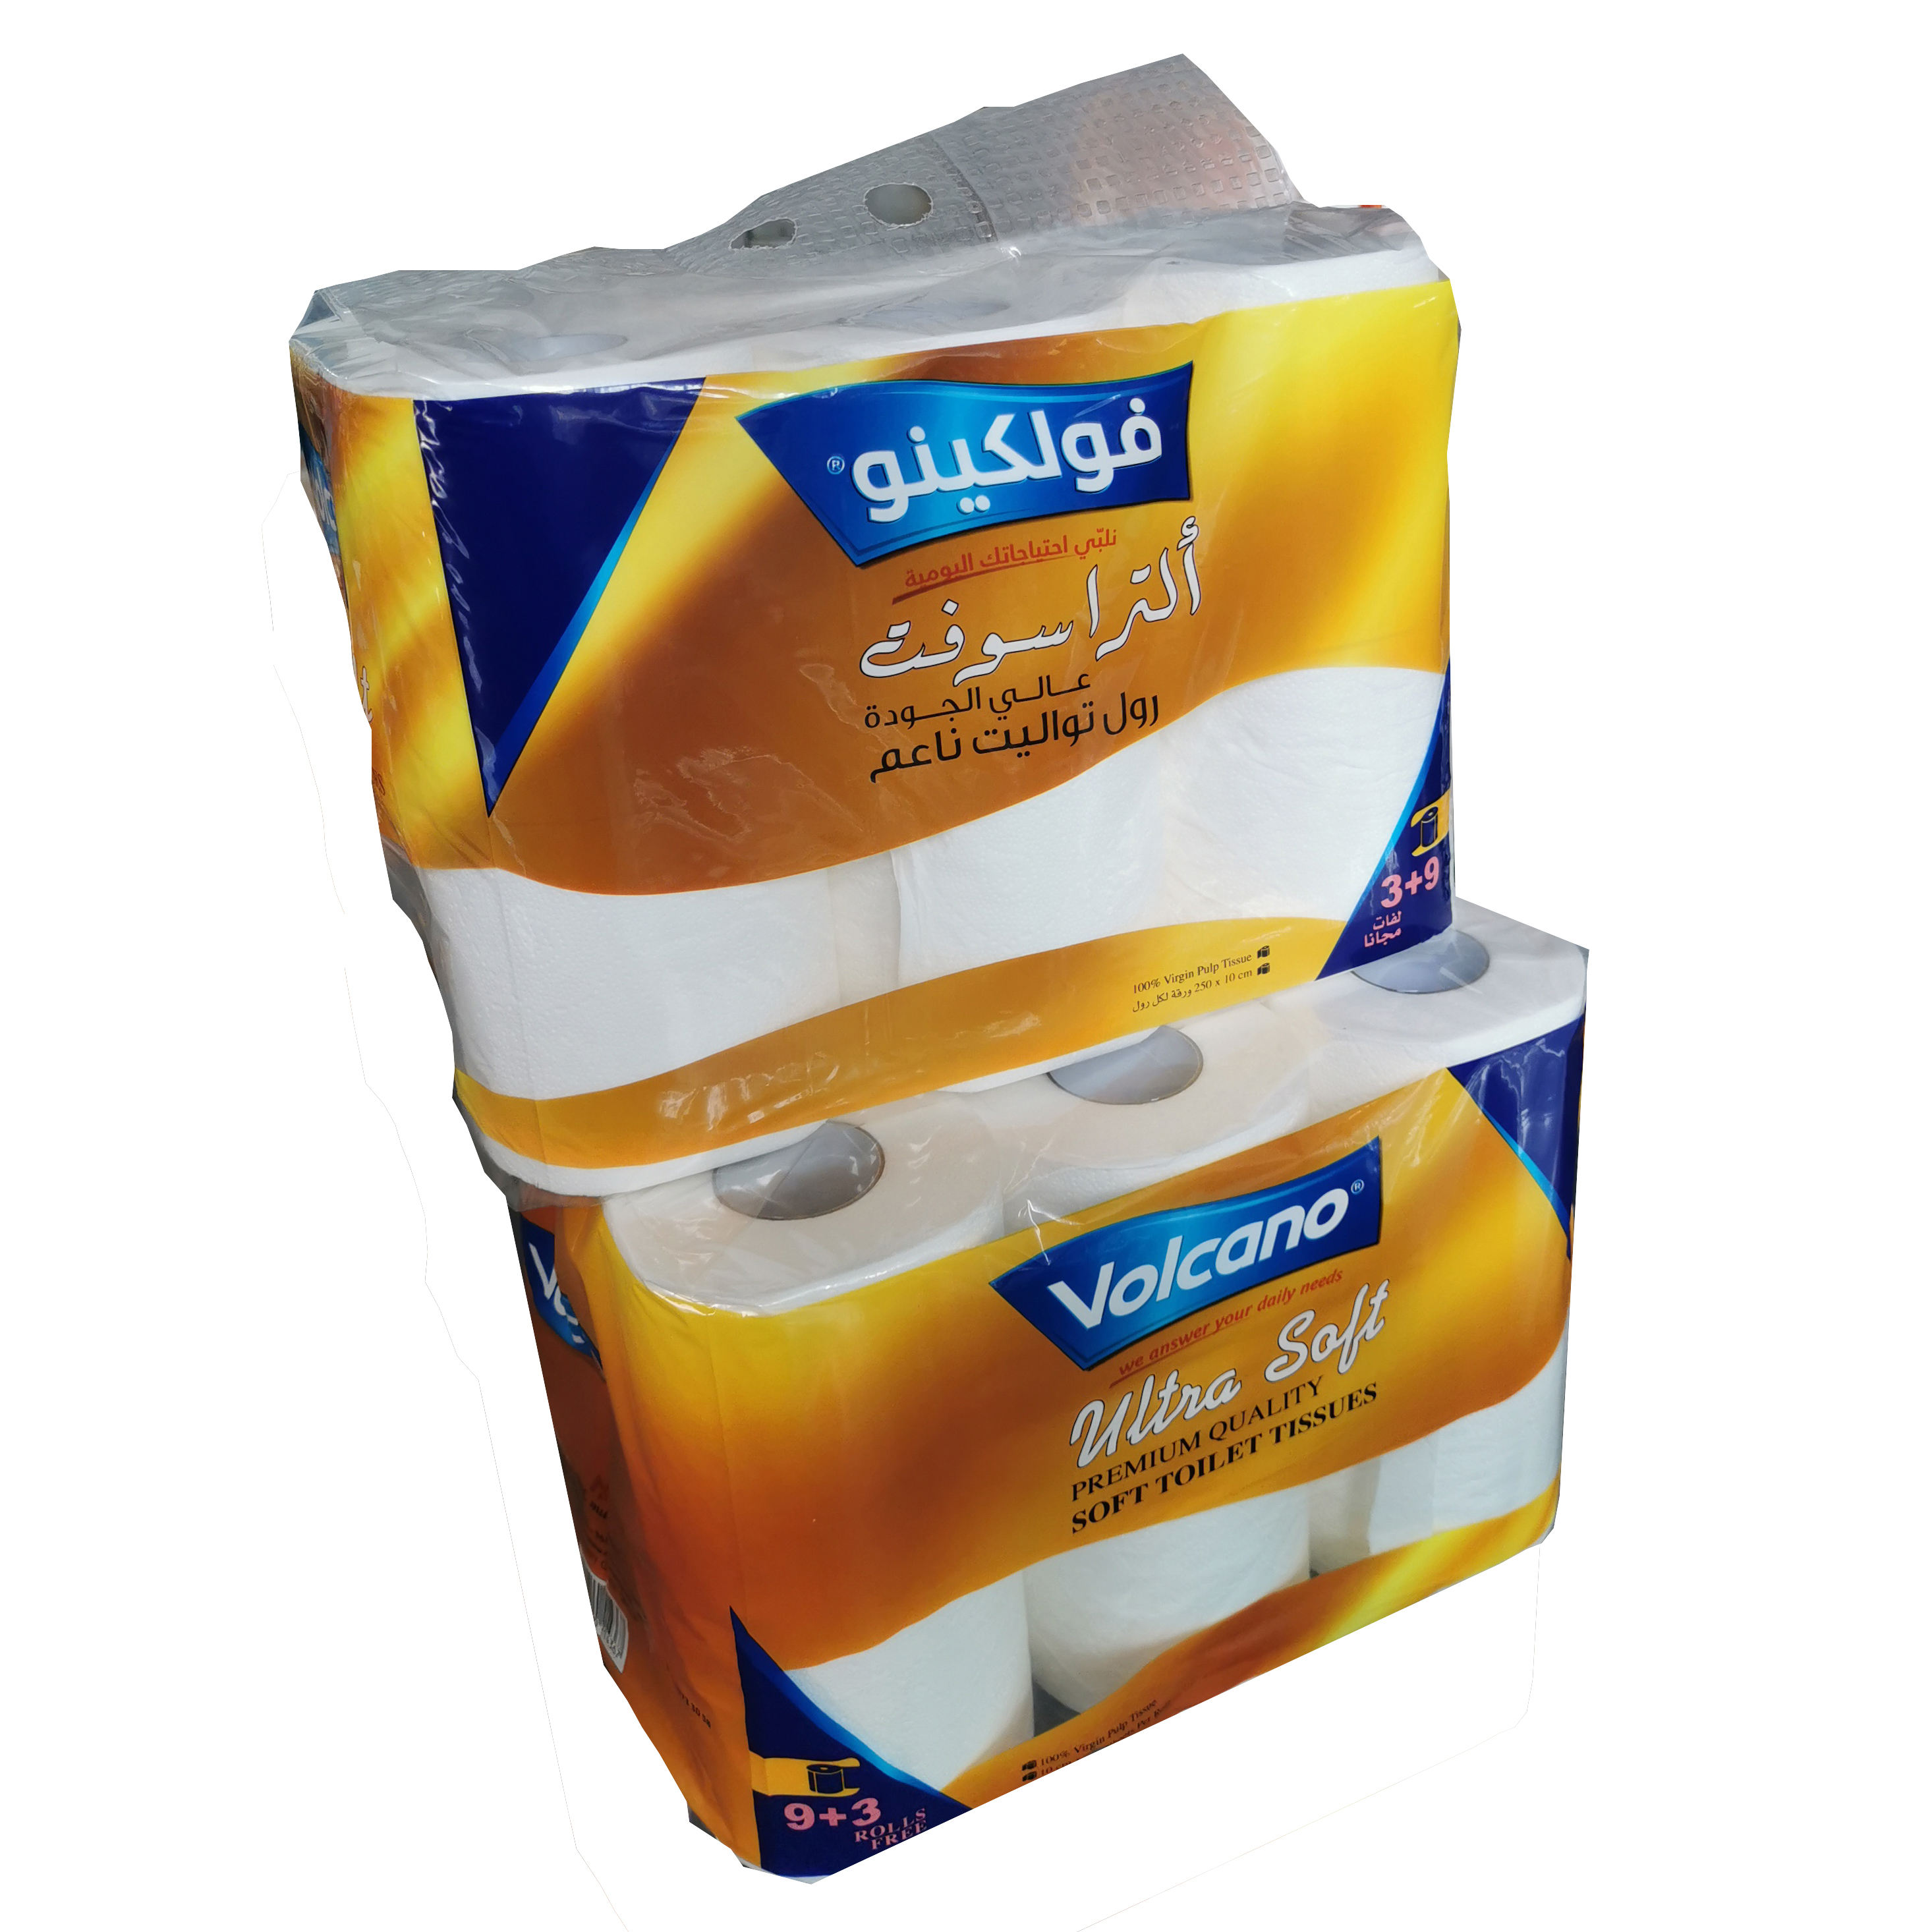 Popular Design New trend New Design biodegradable toilet paper set papel sheets parent roll toilet paper